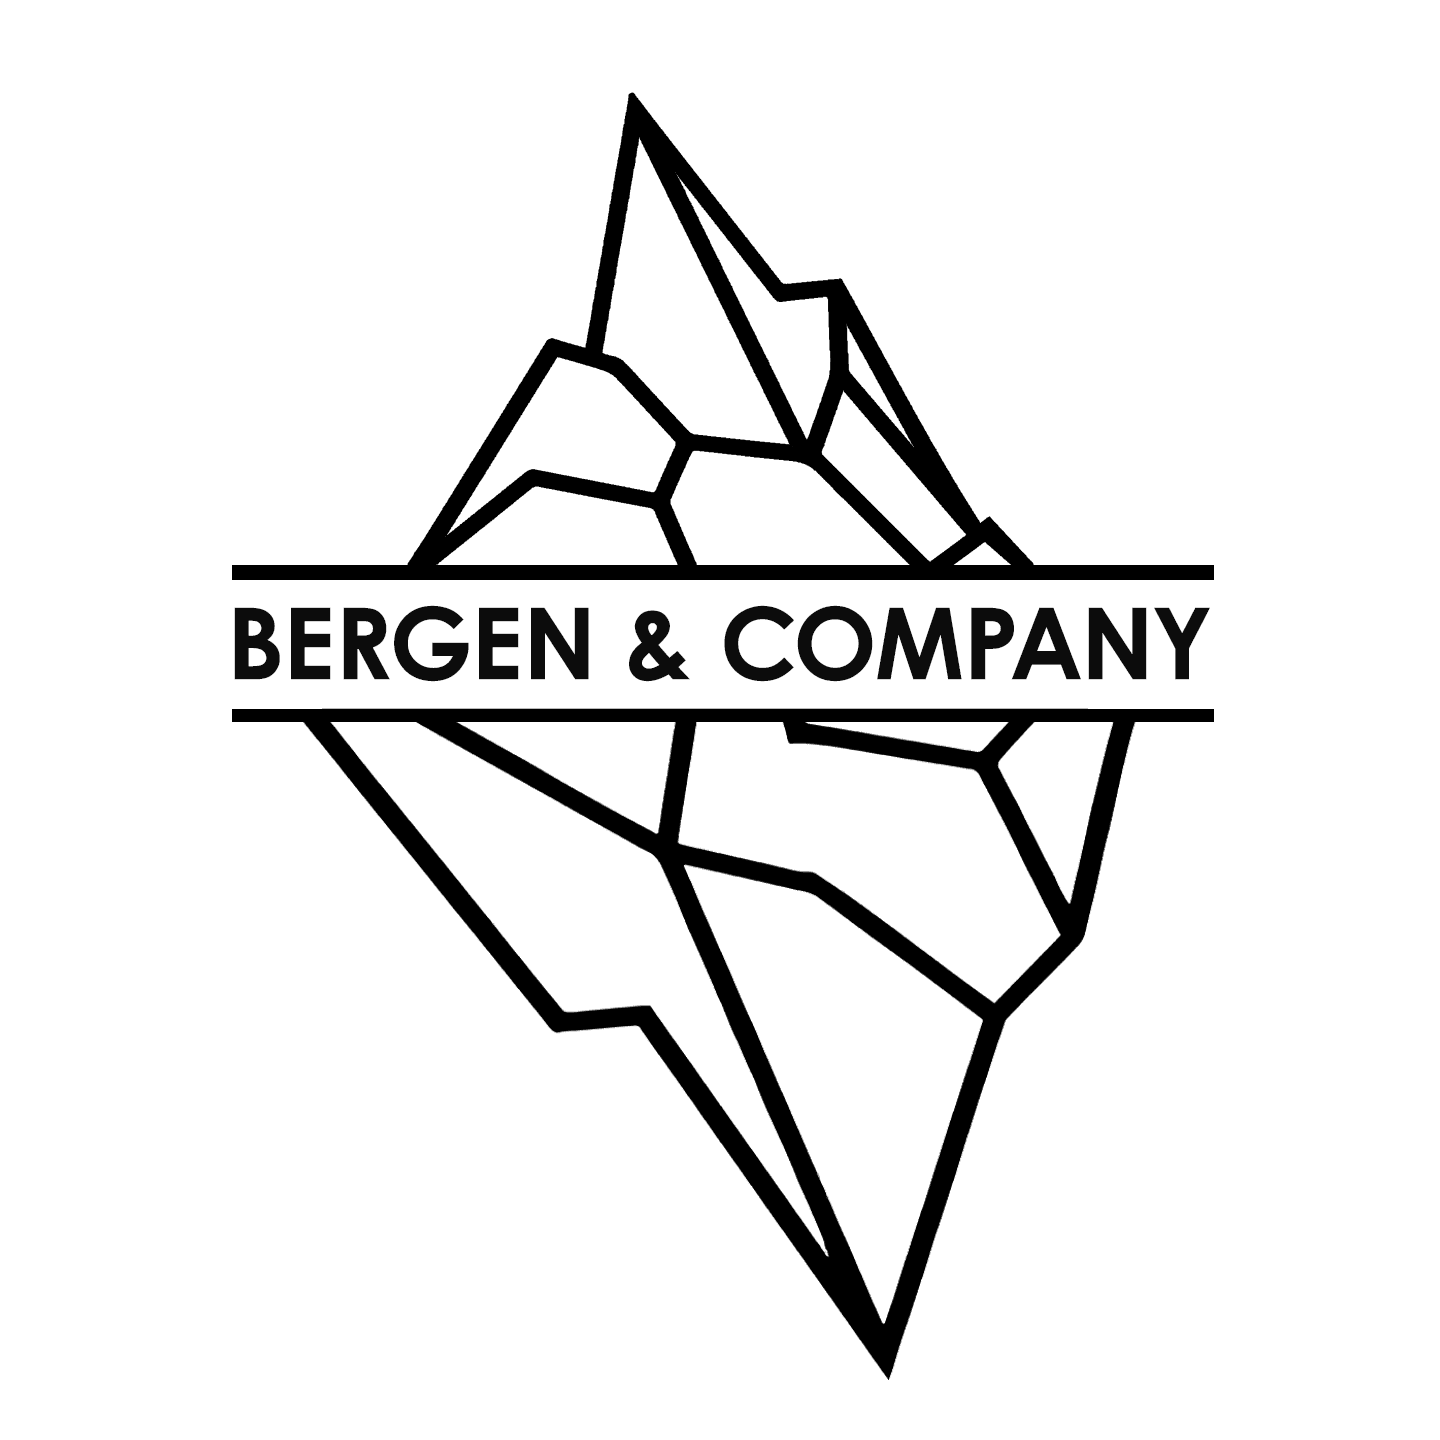 Bergen & Company